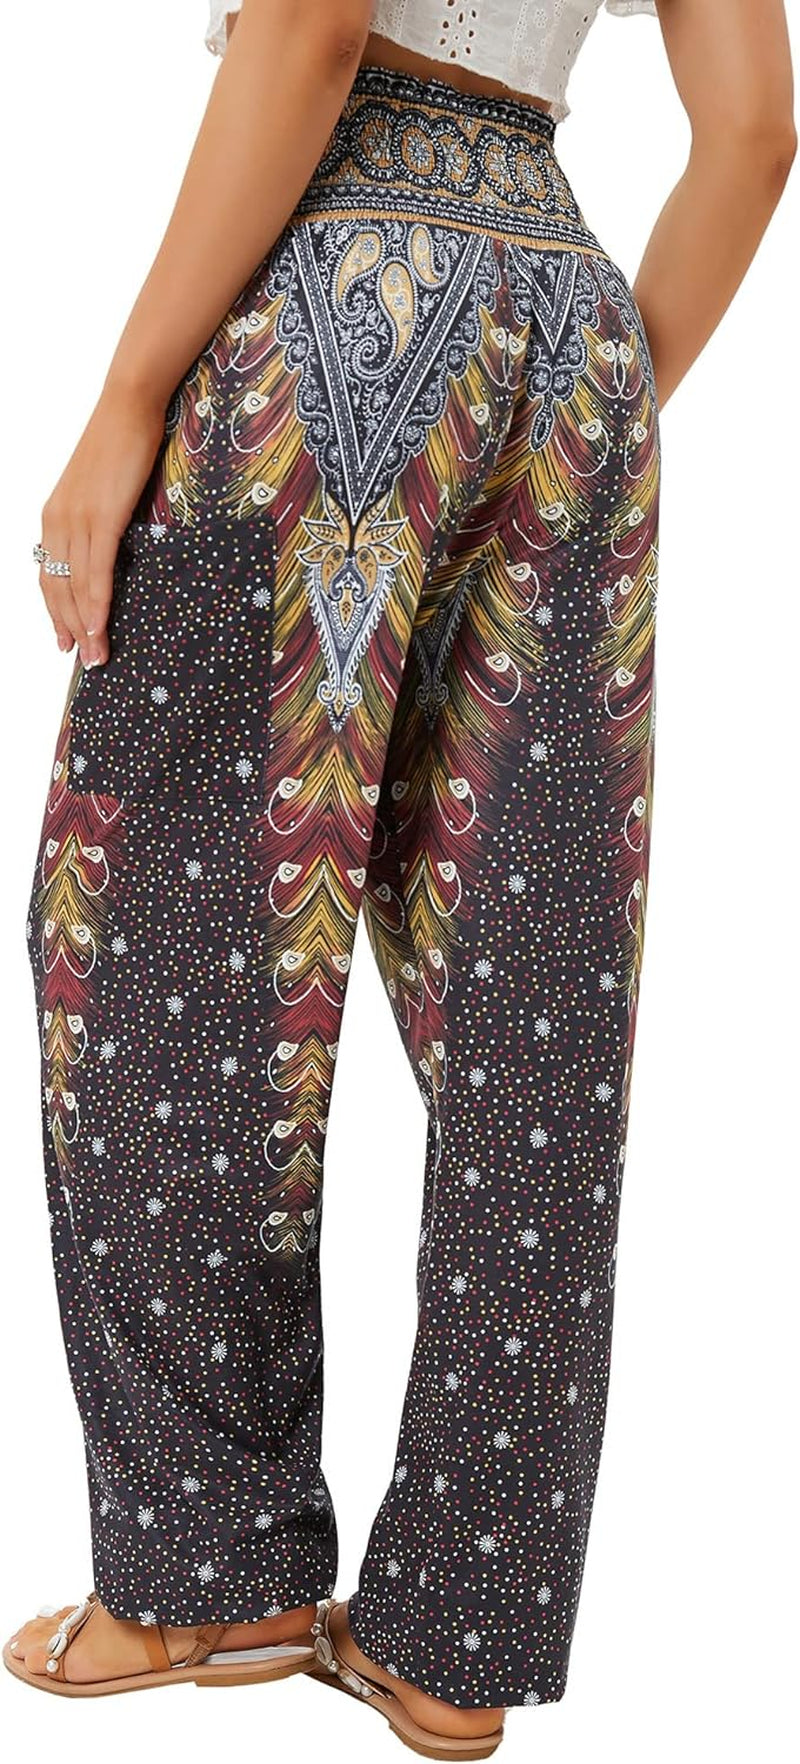 Women's loose baggy Yoga Pants, High Waist Yoga Boho Trousers with Pockets